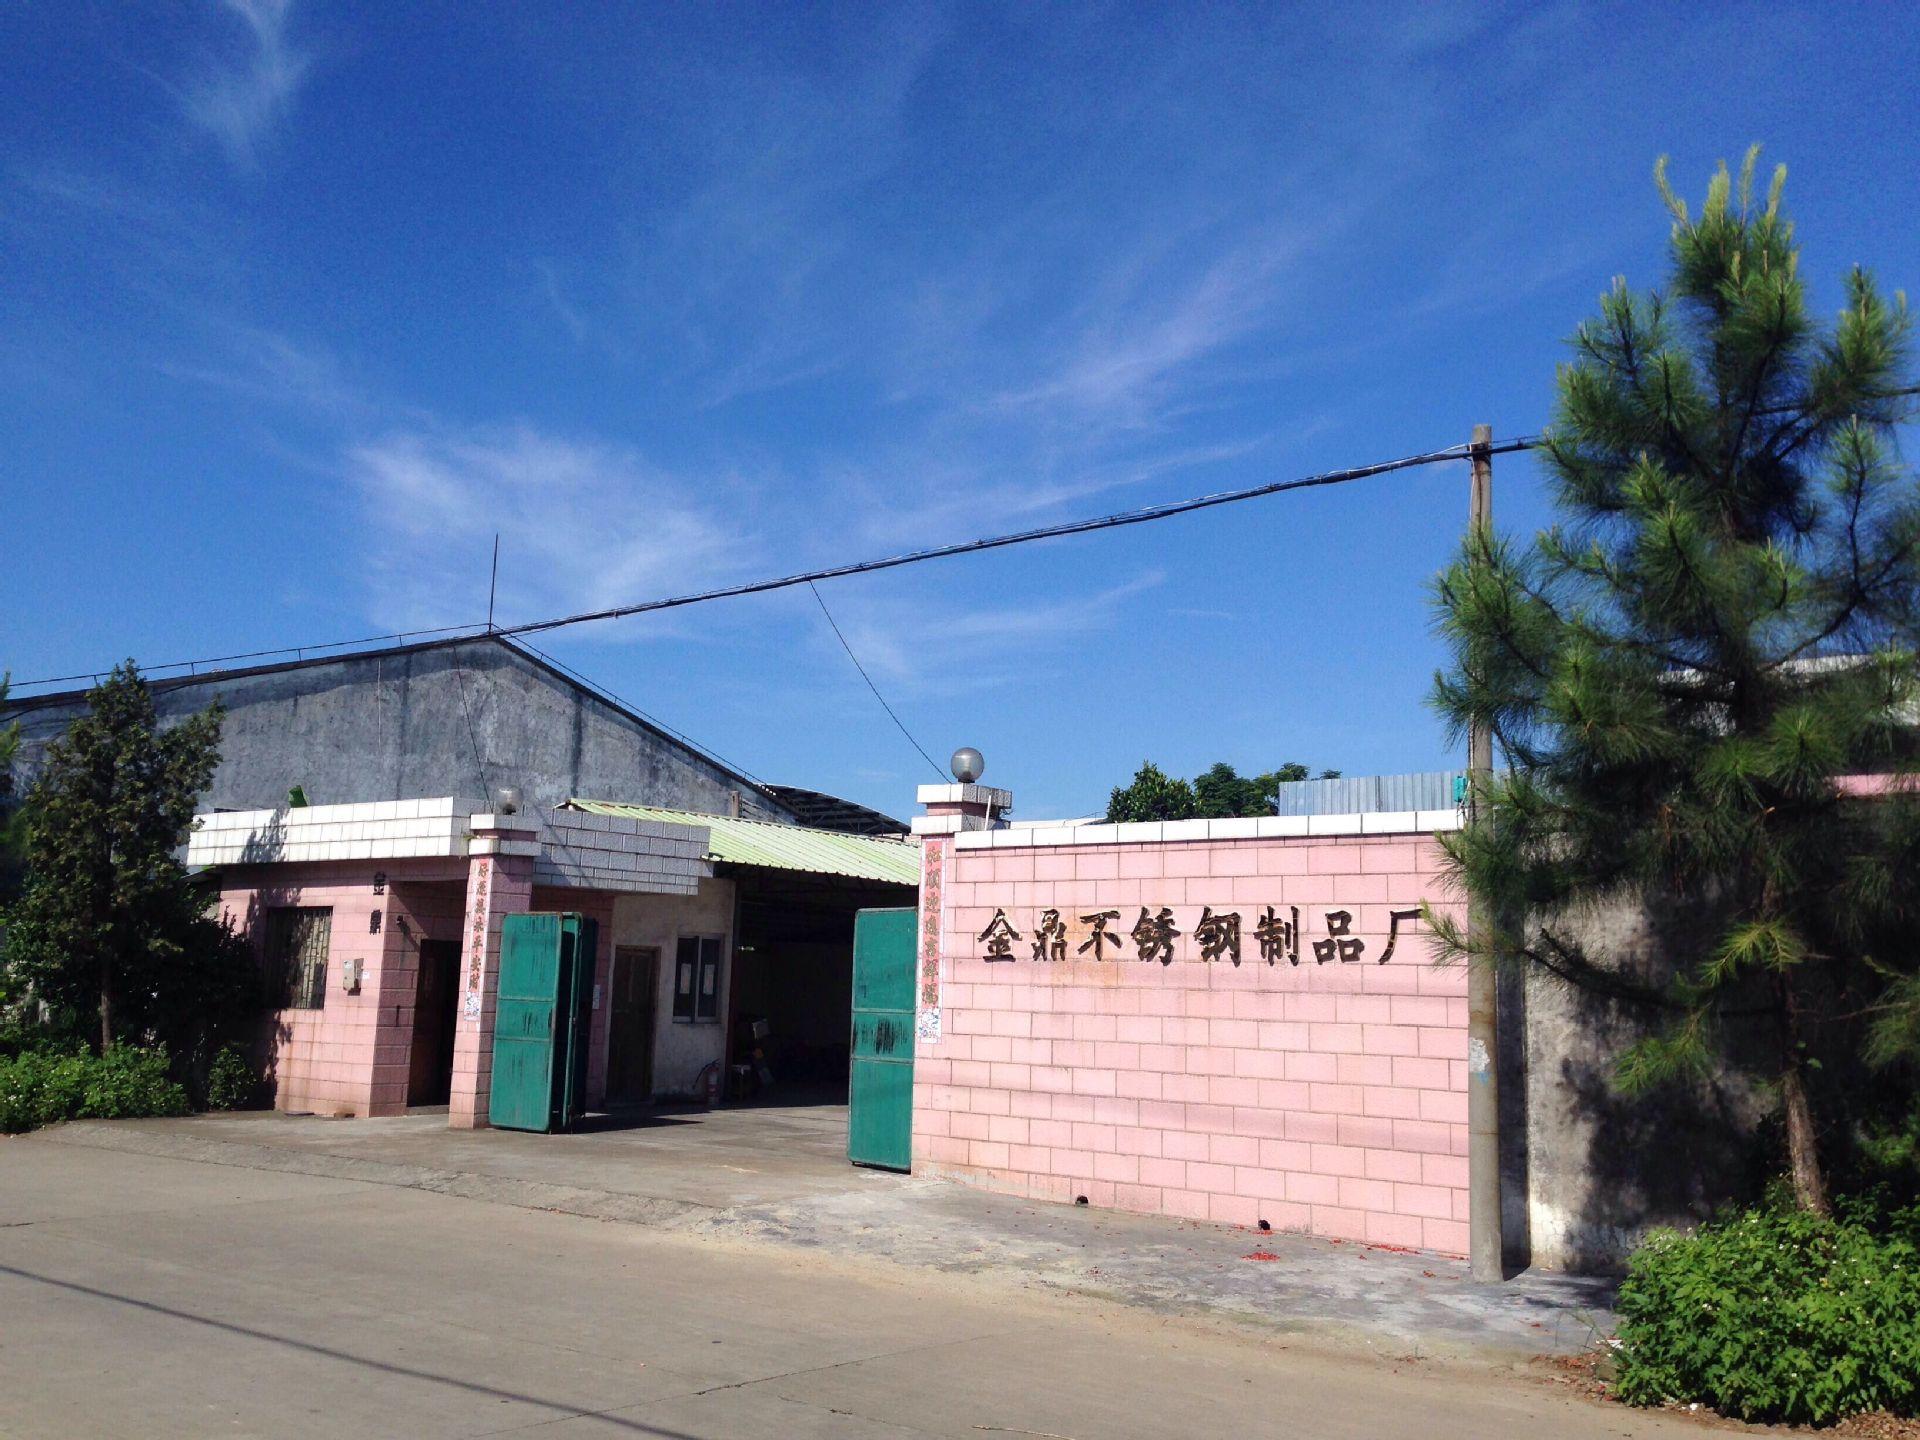      Jiangmen Pengjiang District Jinding Stainless Steel Products Factory